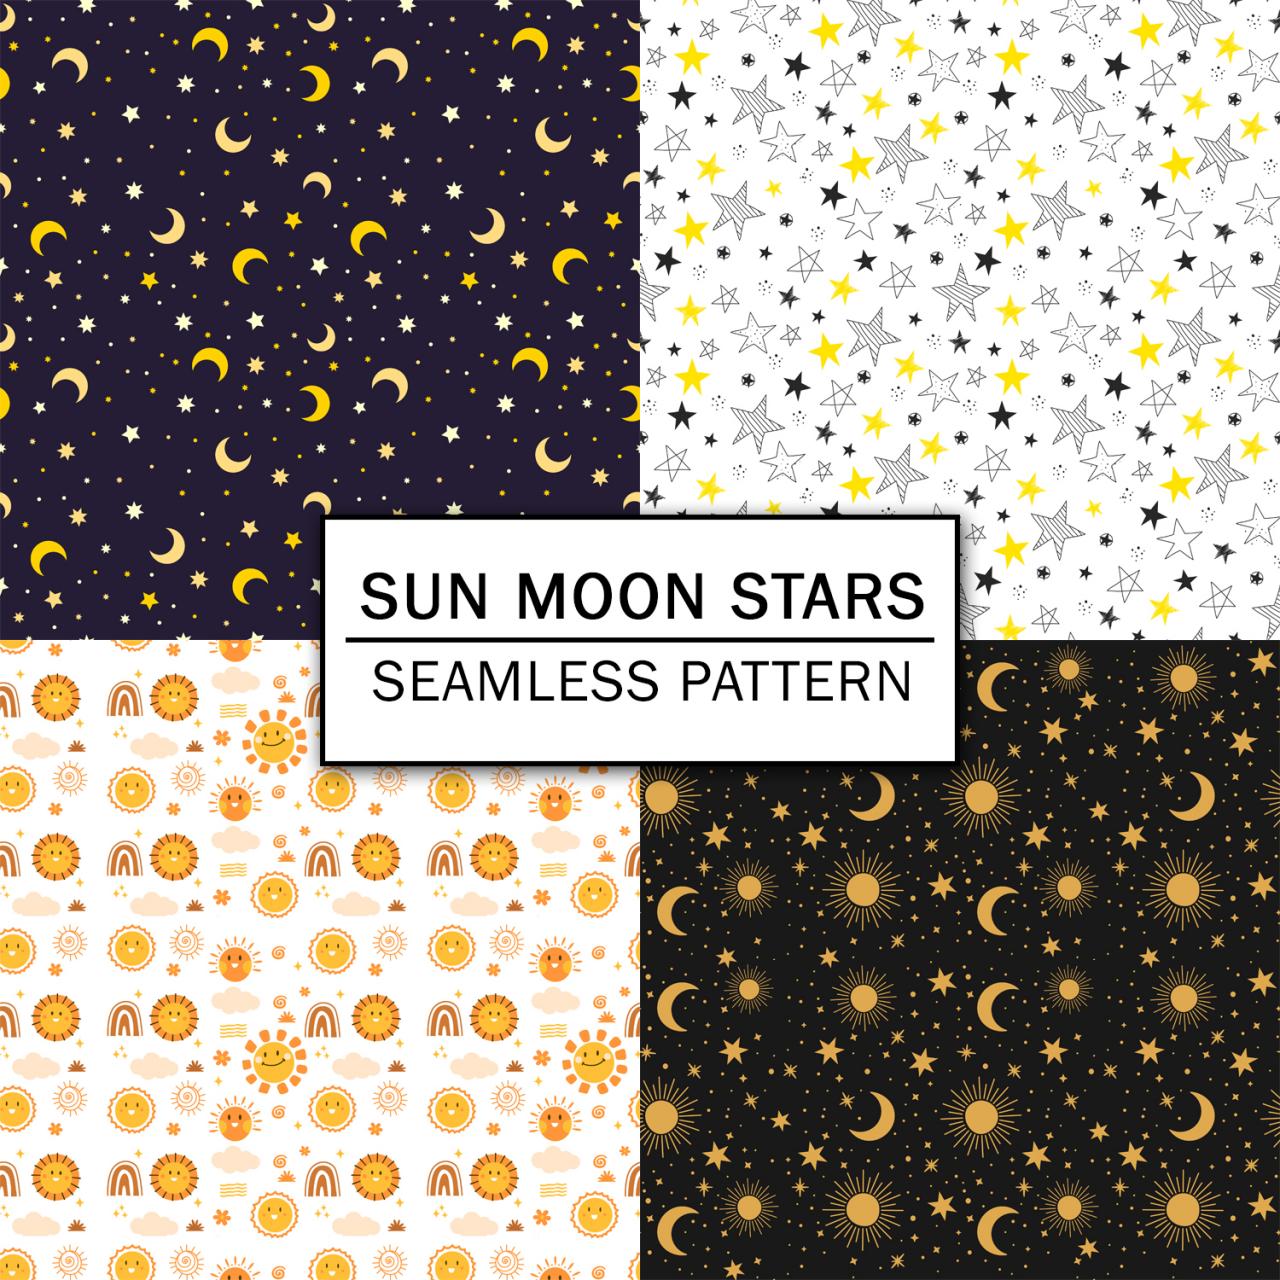 Sun Moon Stars Digital Paper Spring Digital Paper Scrapbooking Paper Set Digital Paper Pack Digital Downloads